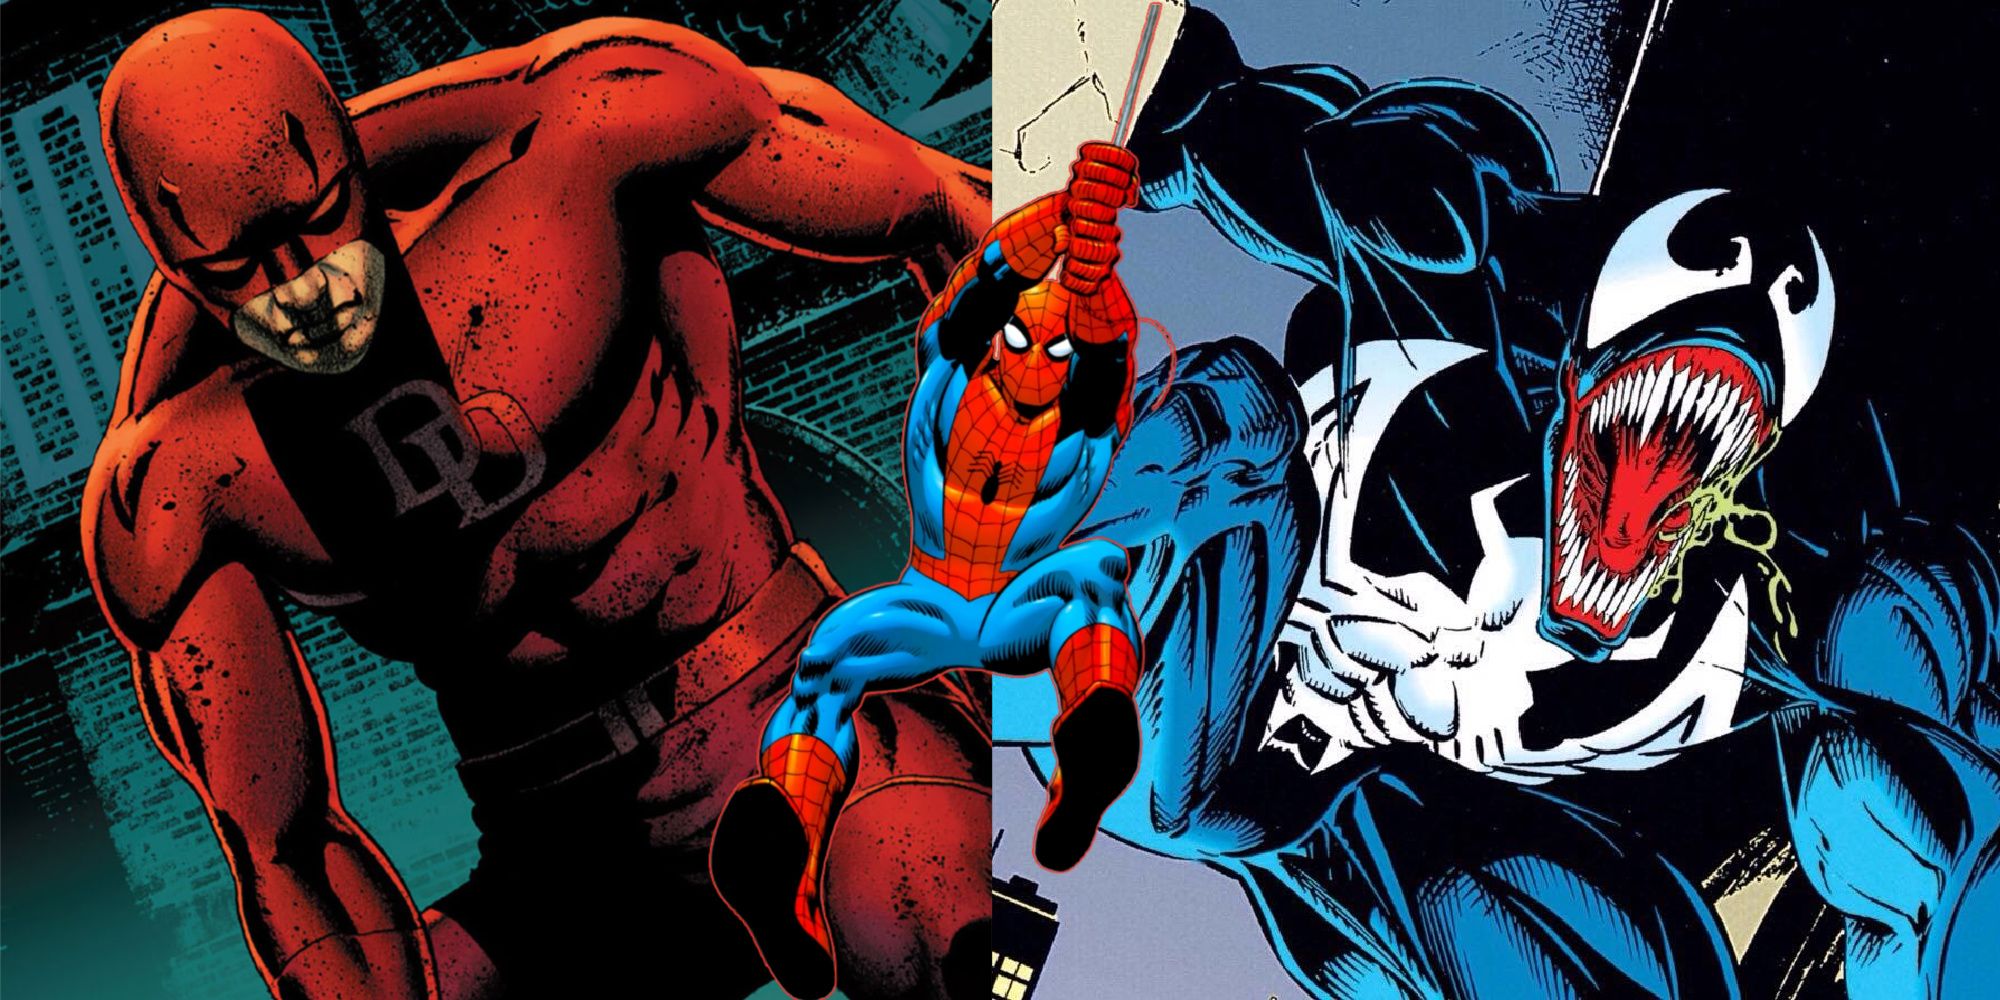 Split image of Daredevil and Venom with Spider-Man swinging from Marvel Comics.